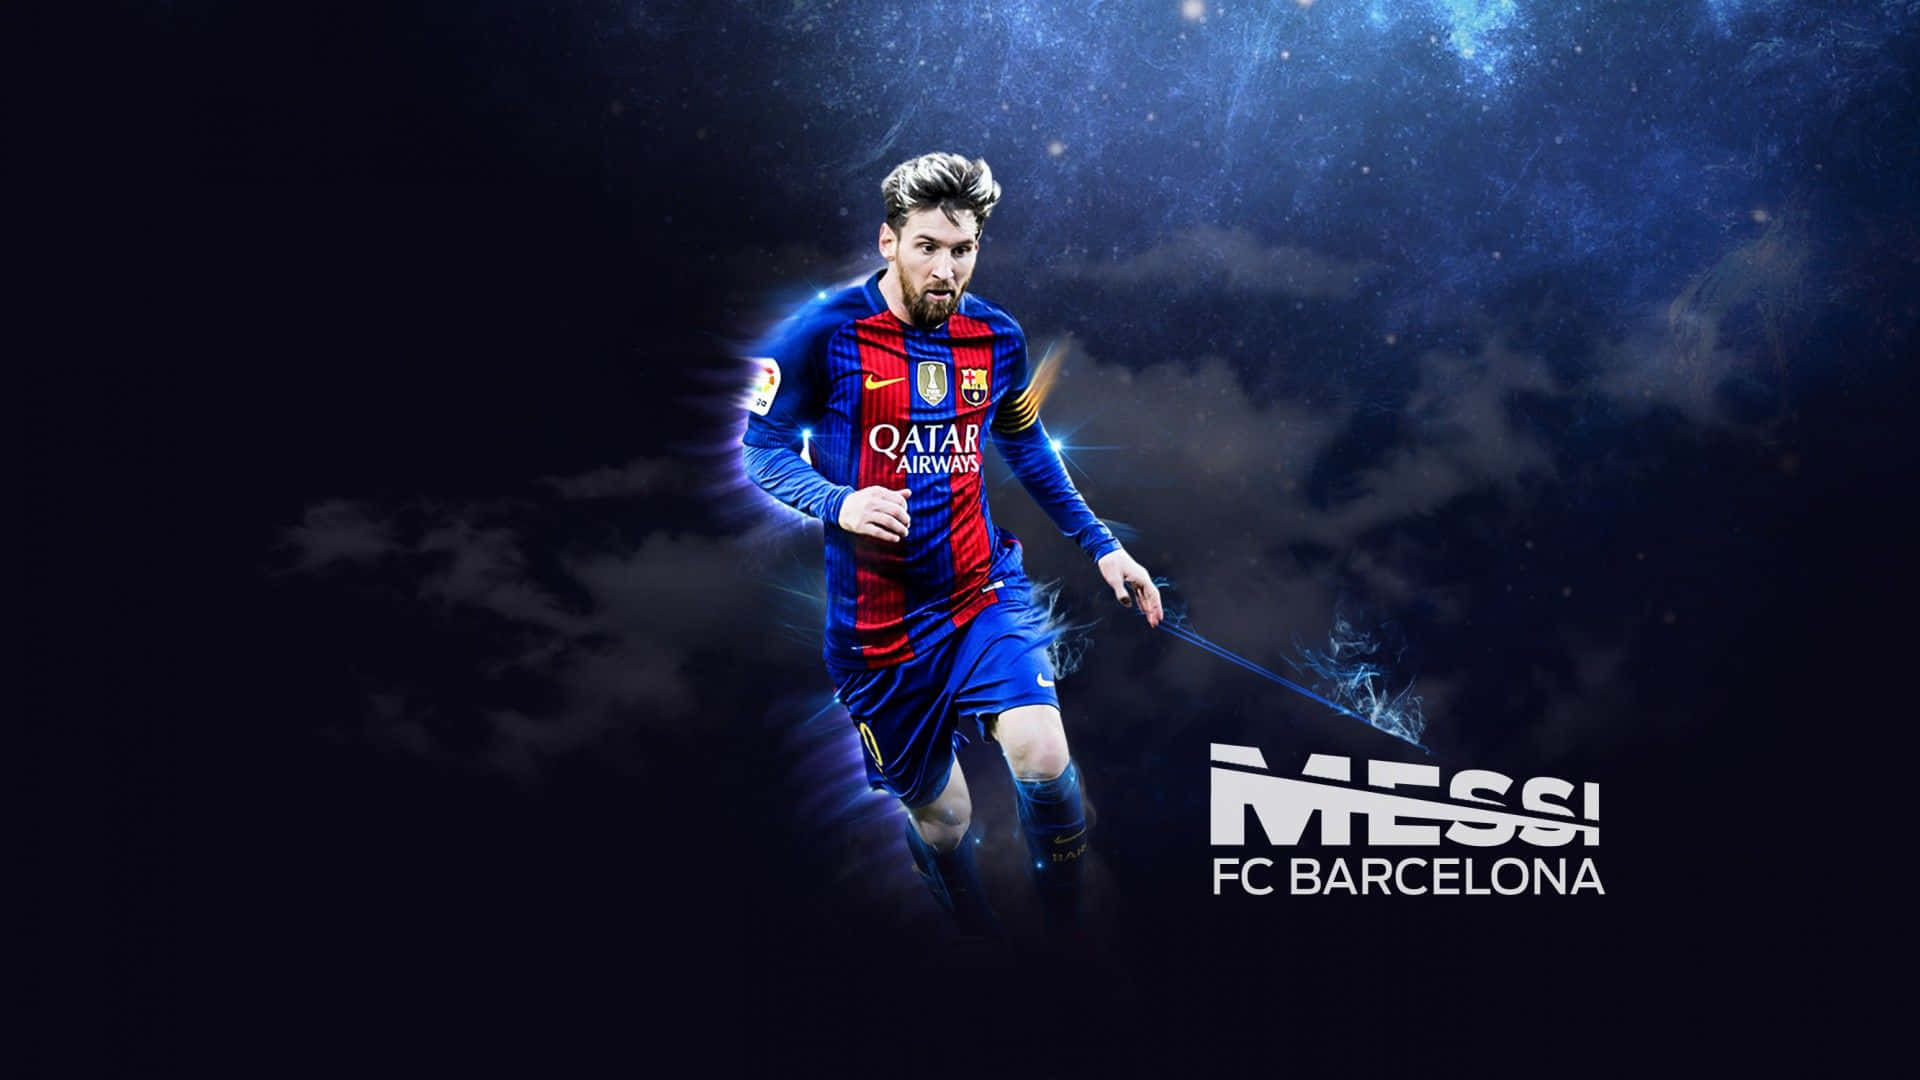 Lionel Messi, the GOAT